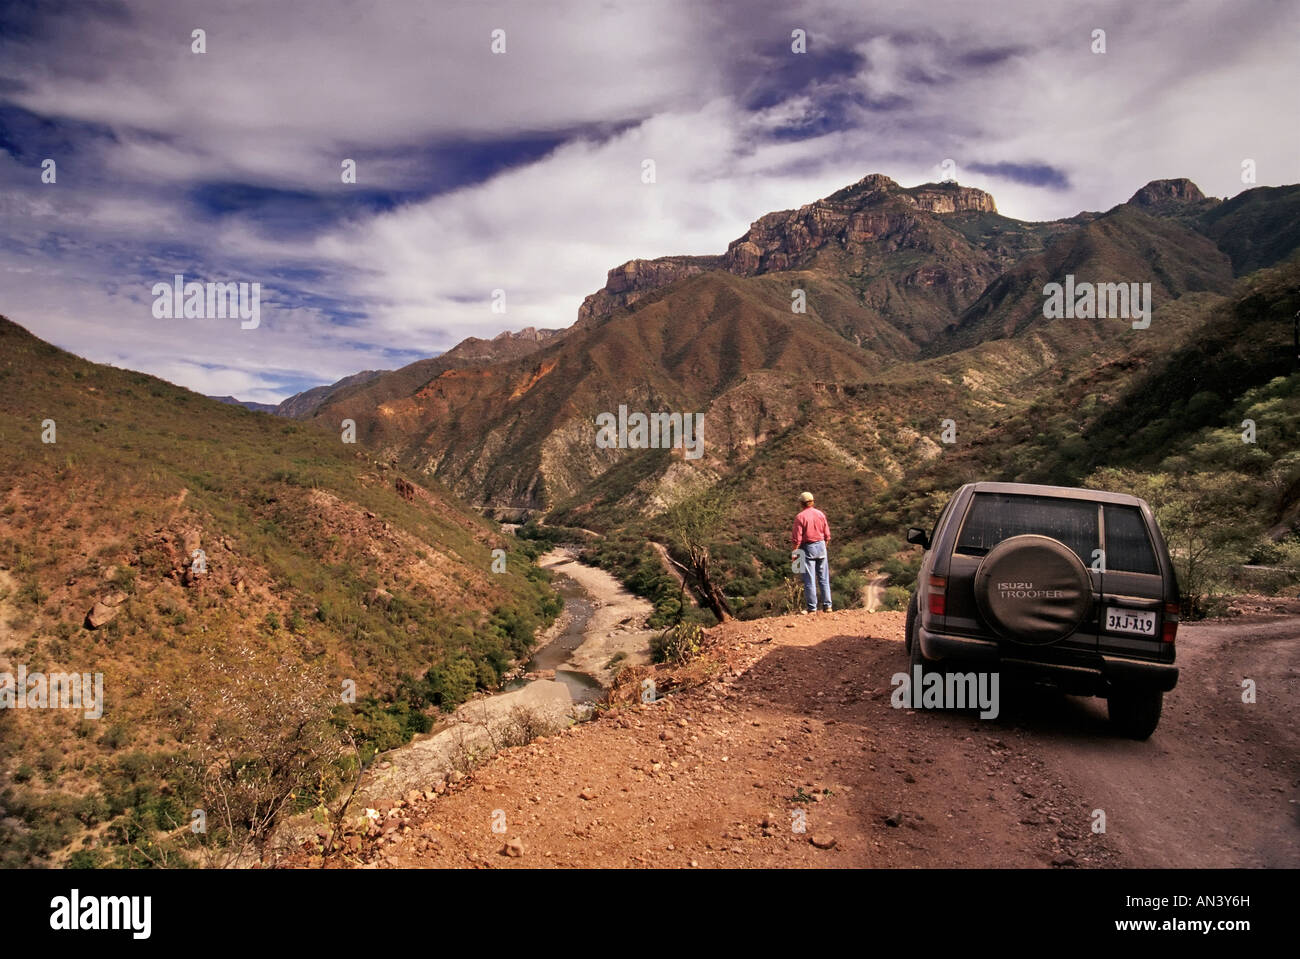 Tourist, 4WD vehicle on road to Batopilas, Barranca de Batopilas, in Copper Canyon (Barranca del Cobre), Mexico Stock Photo